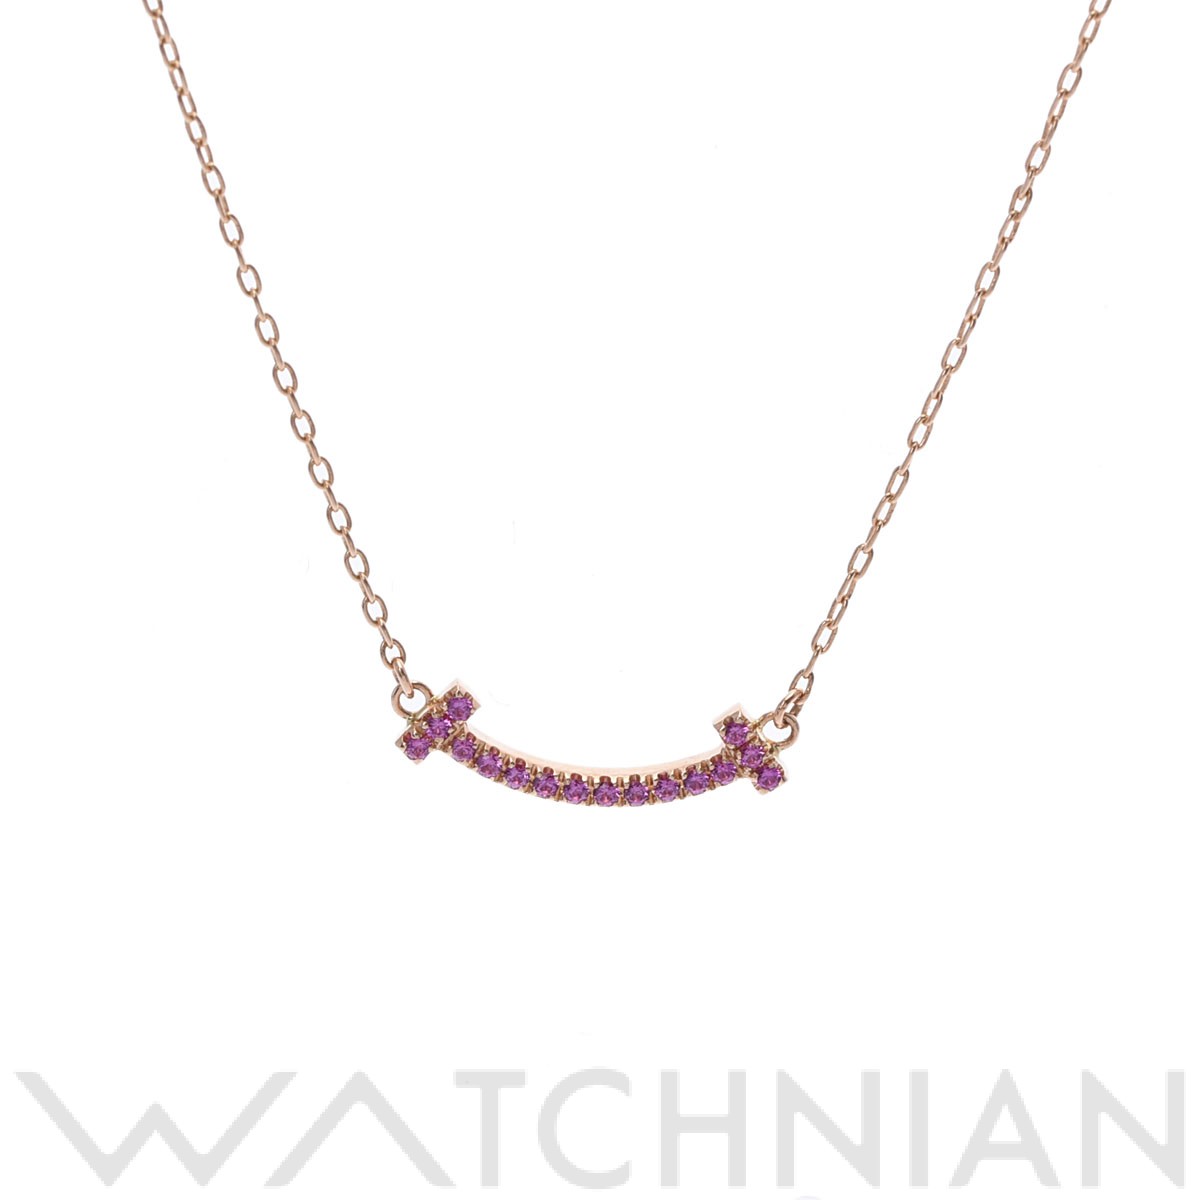 Tiffany スマイル ピンクサファイヤ ネックレス k18 WG ホリデー